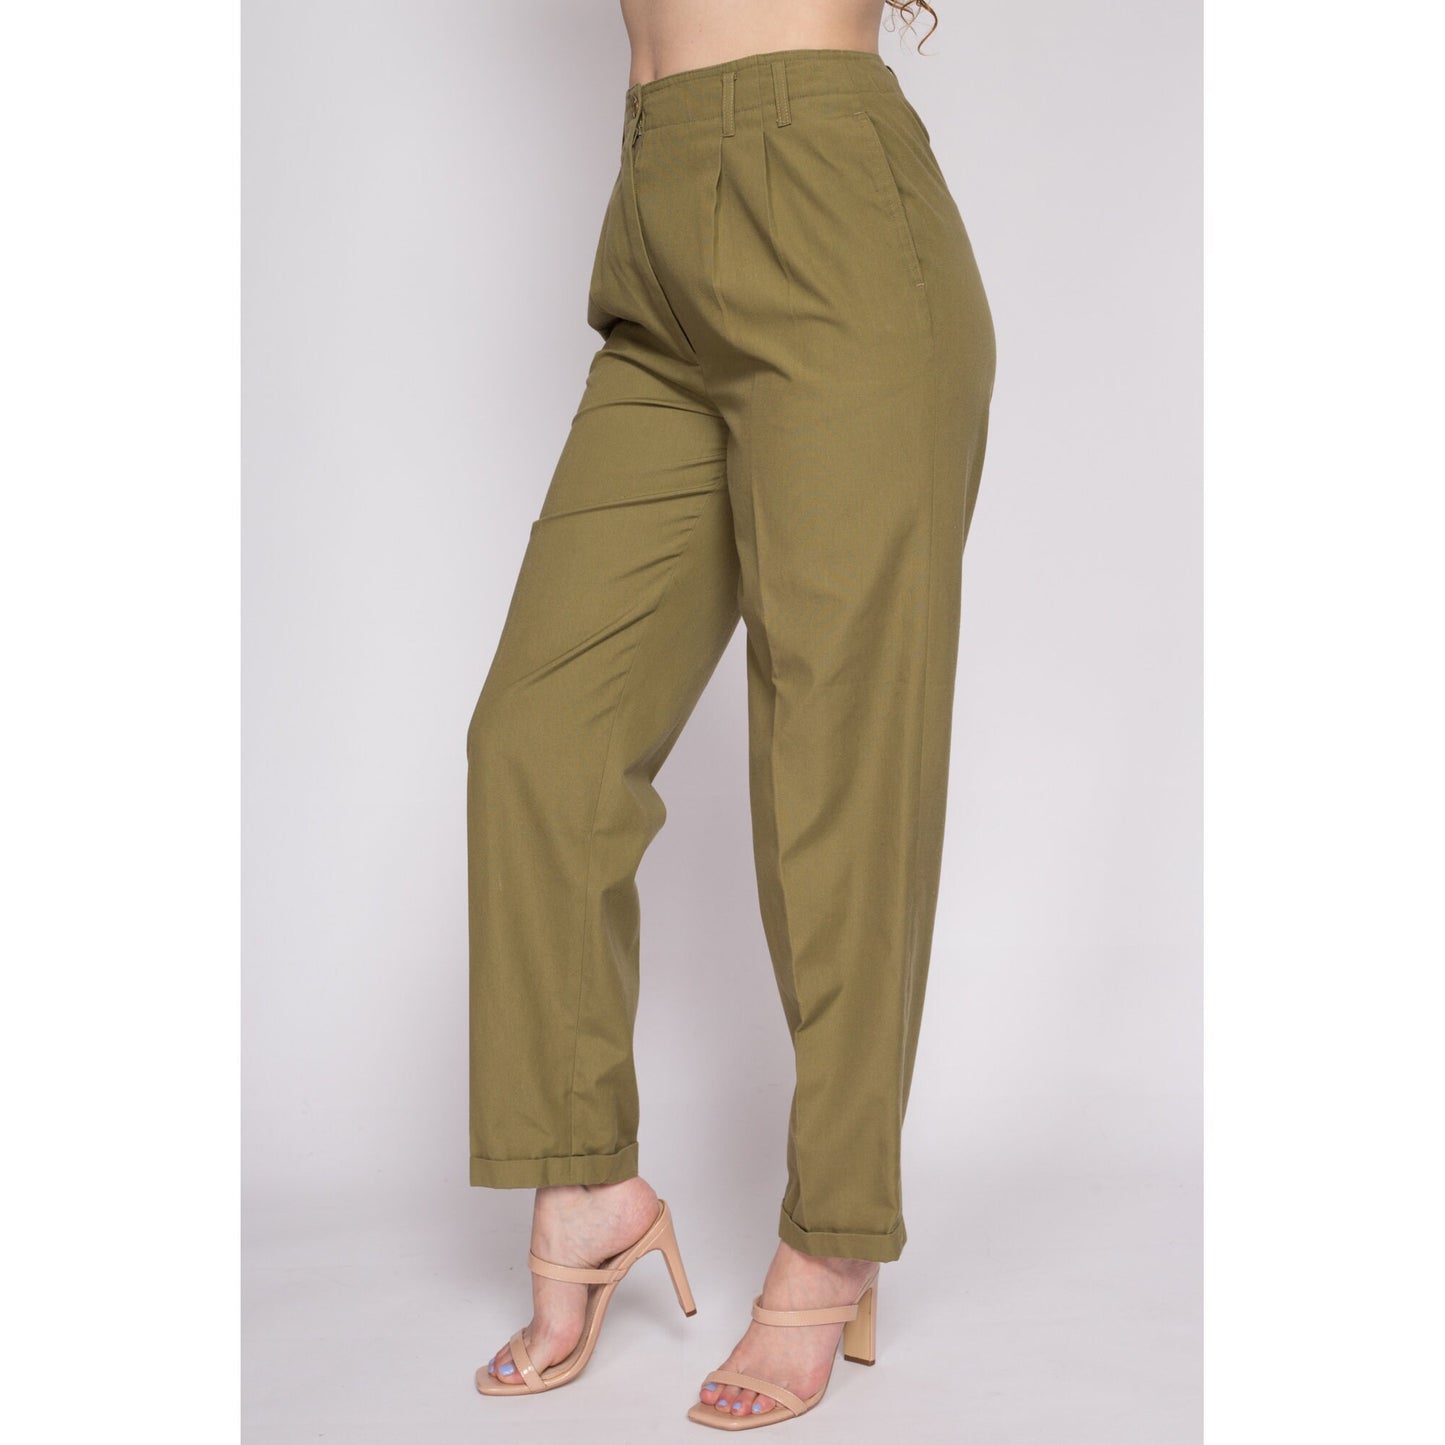 M| 80s Olive High Waisted Trousers - Medium, 28" | Vintage Minimalist Army Green Pleated Tapered Leg Pants